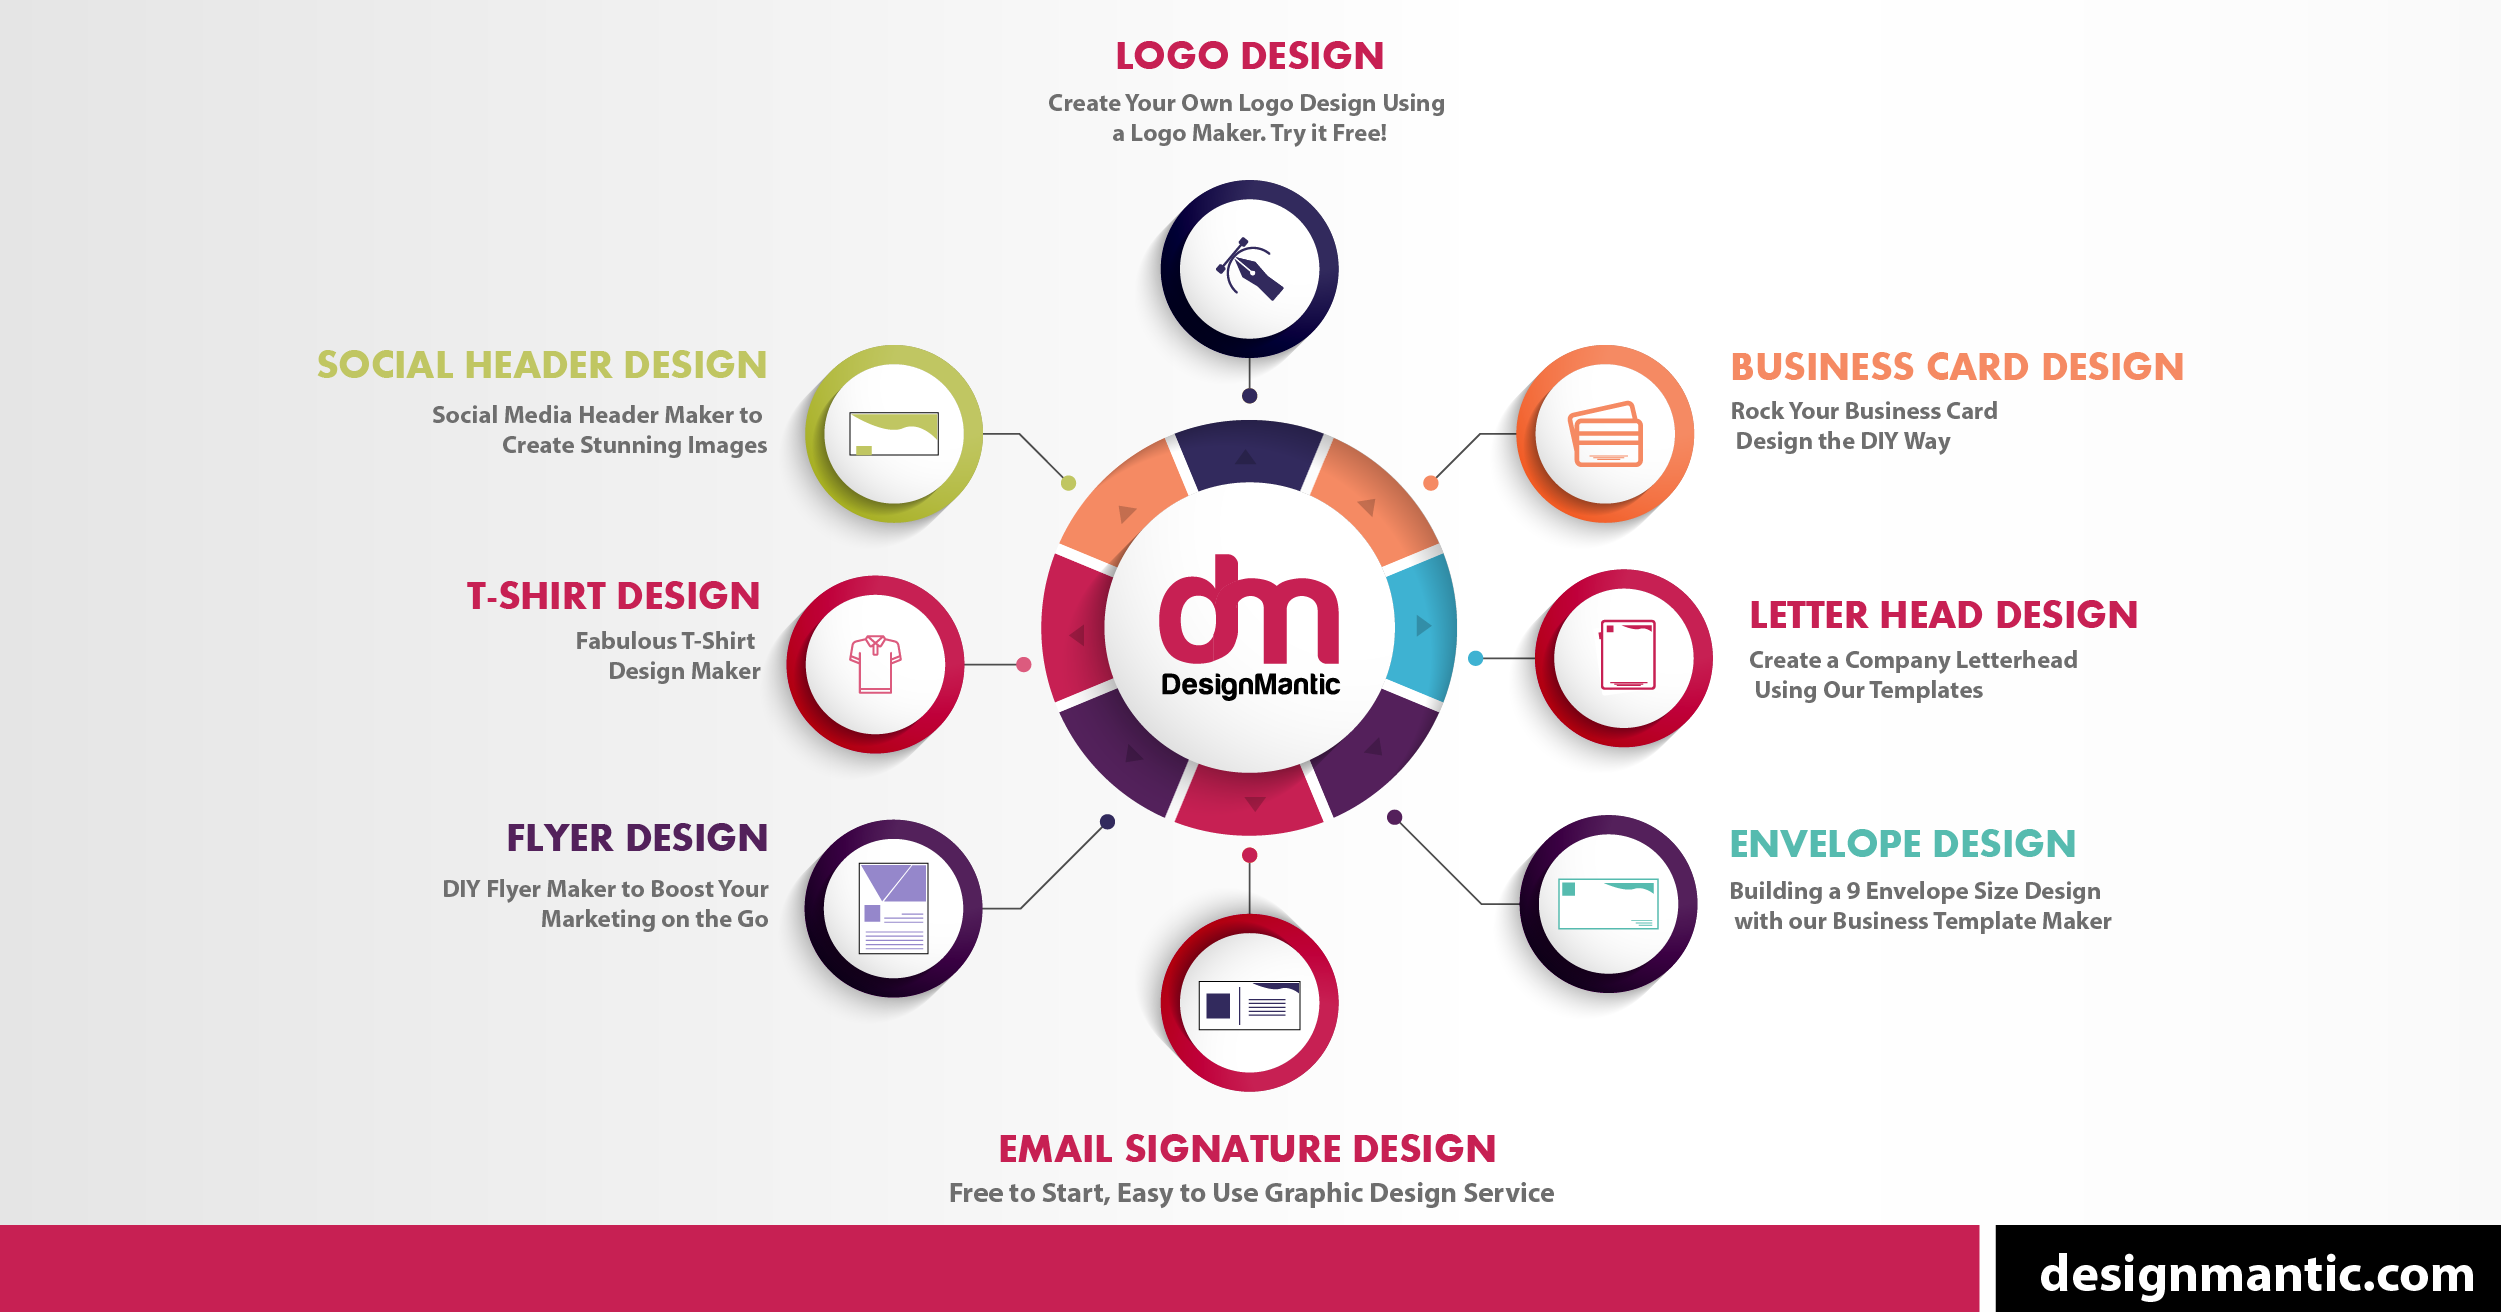 Graphic Design Software Logo Tool Designmantic The Design Shop